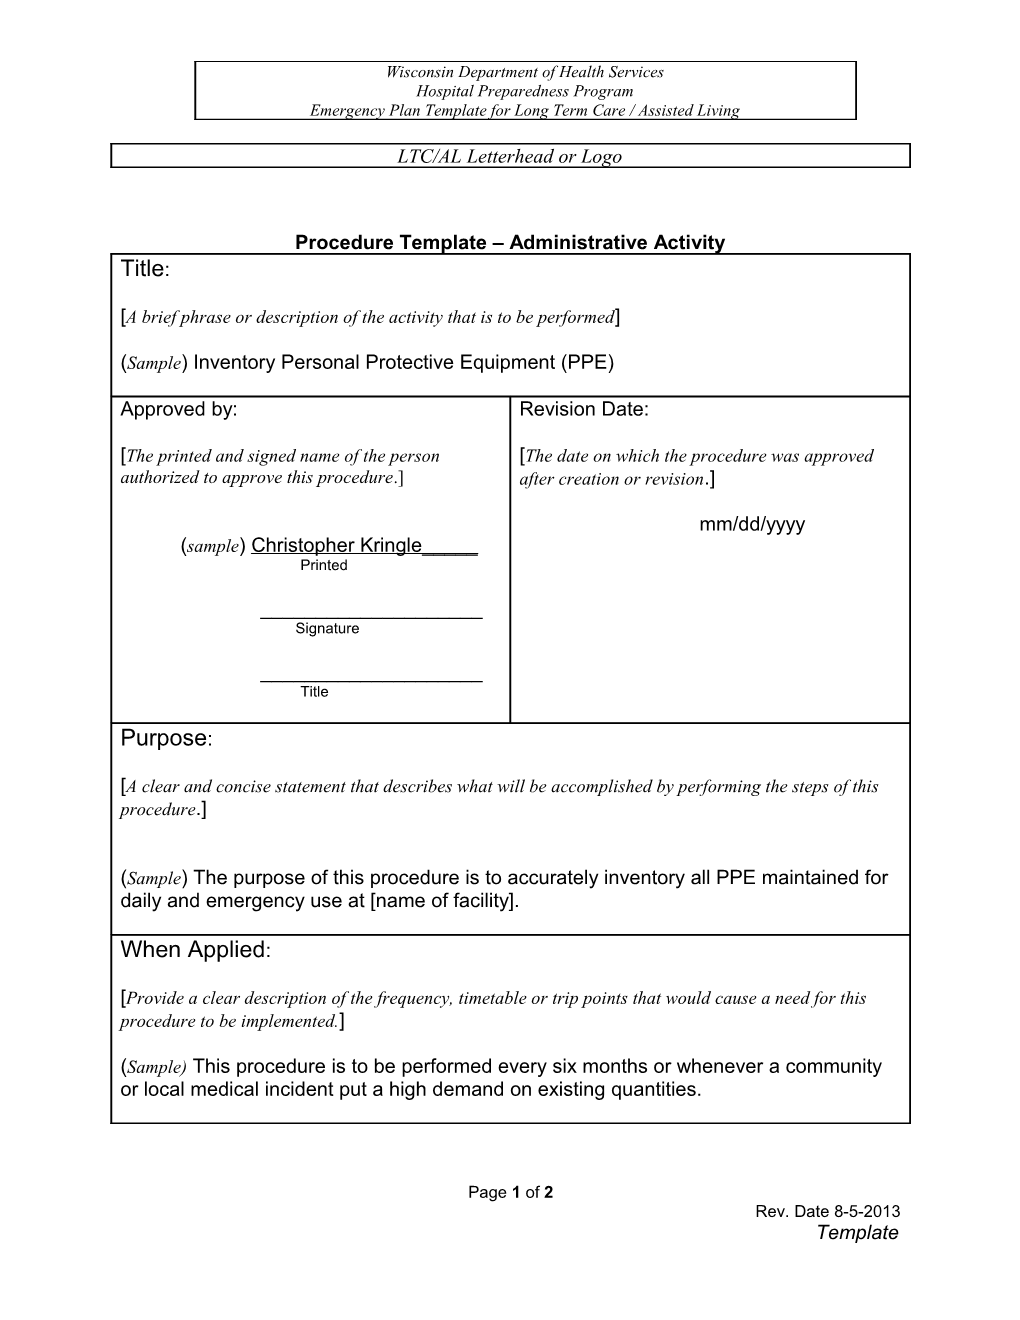 Procedure Template Administrative Activity